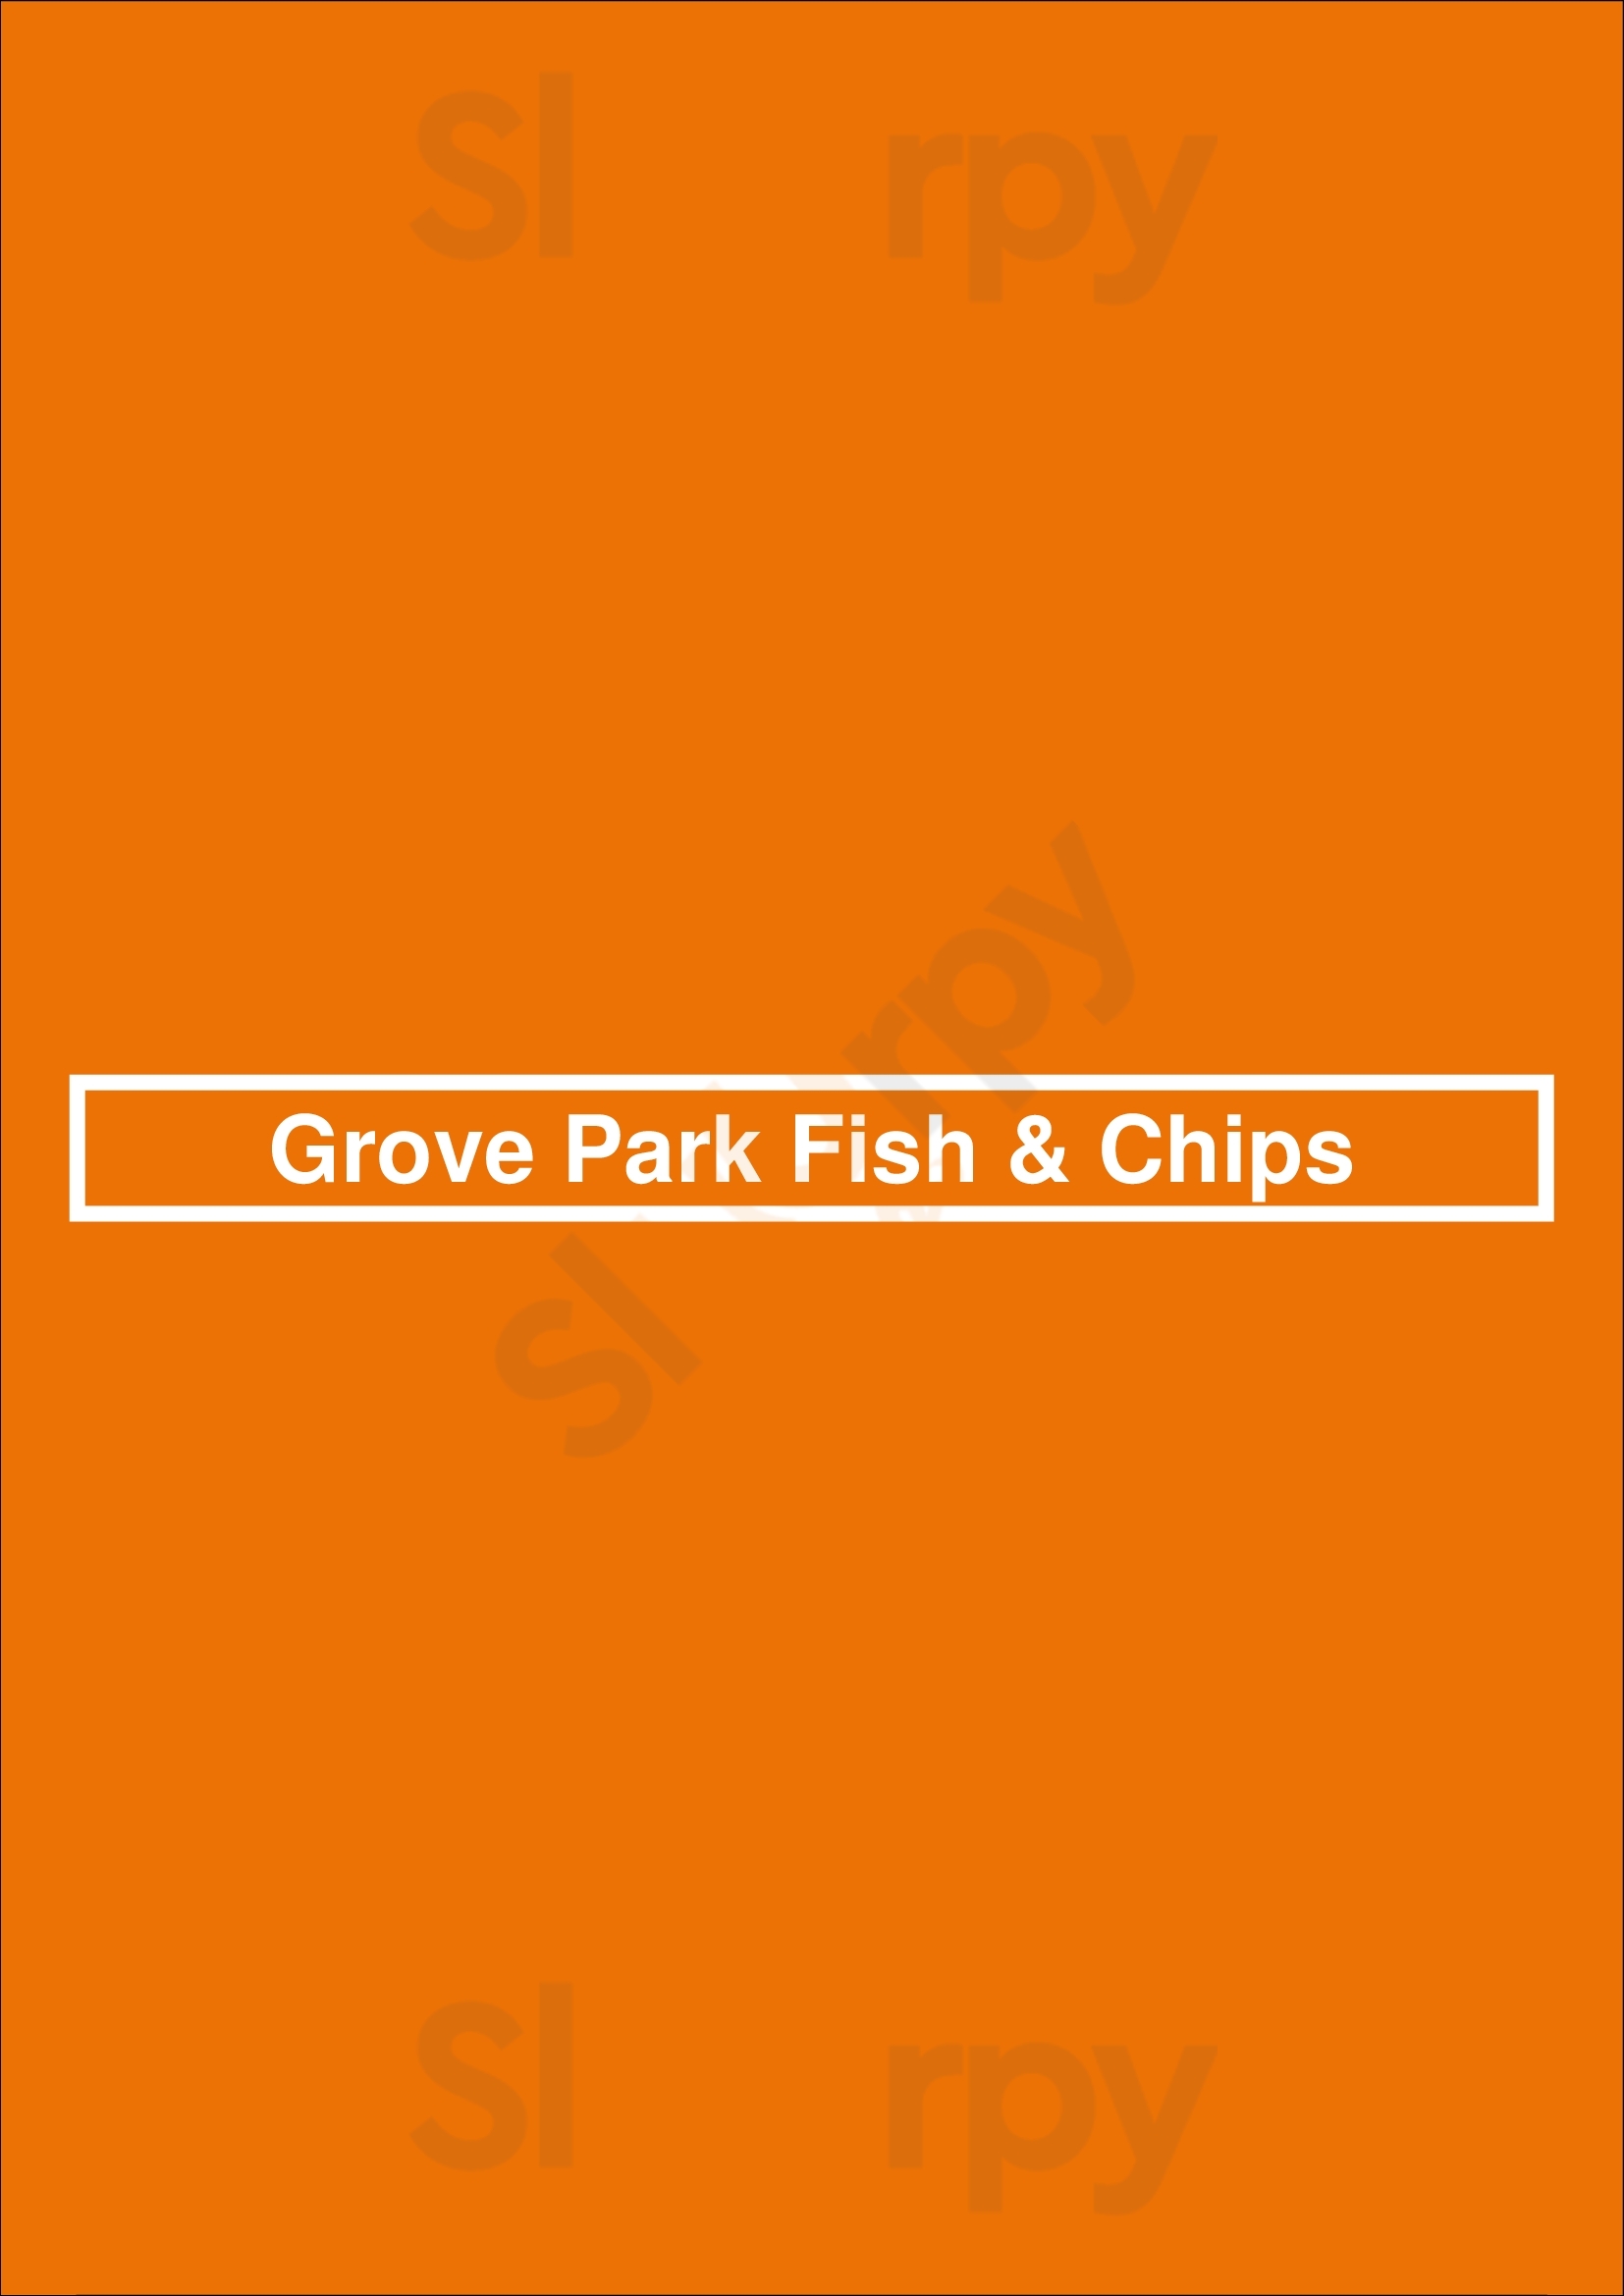 Grove Park Fish & Chips London Menu - 1